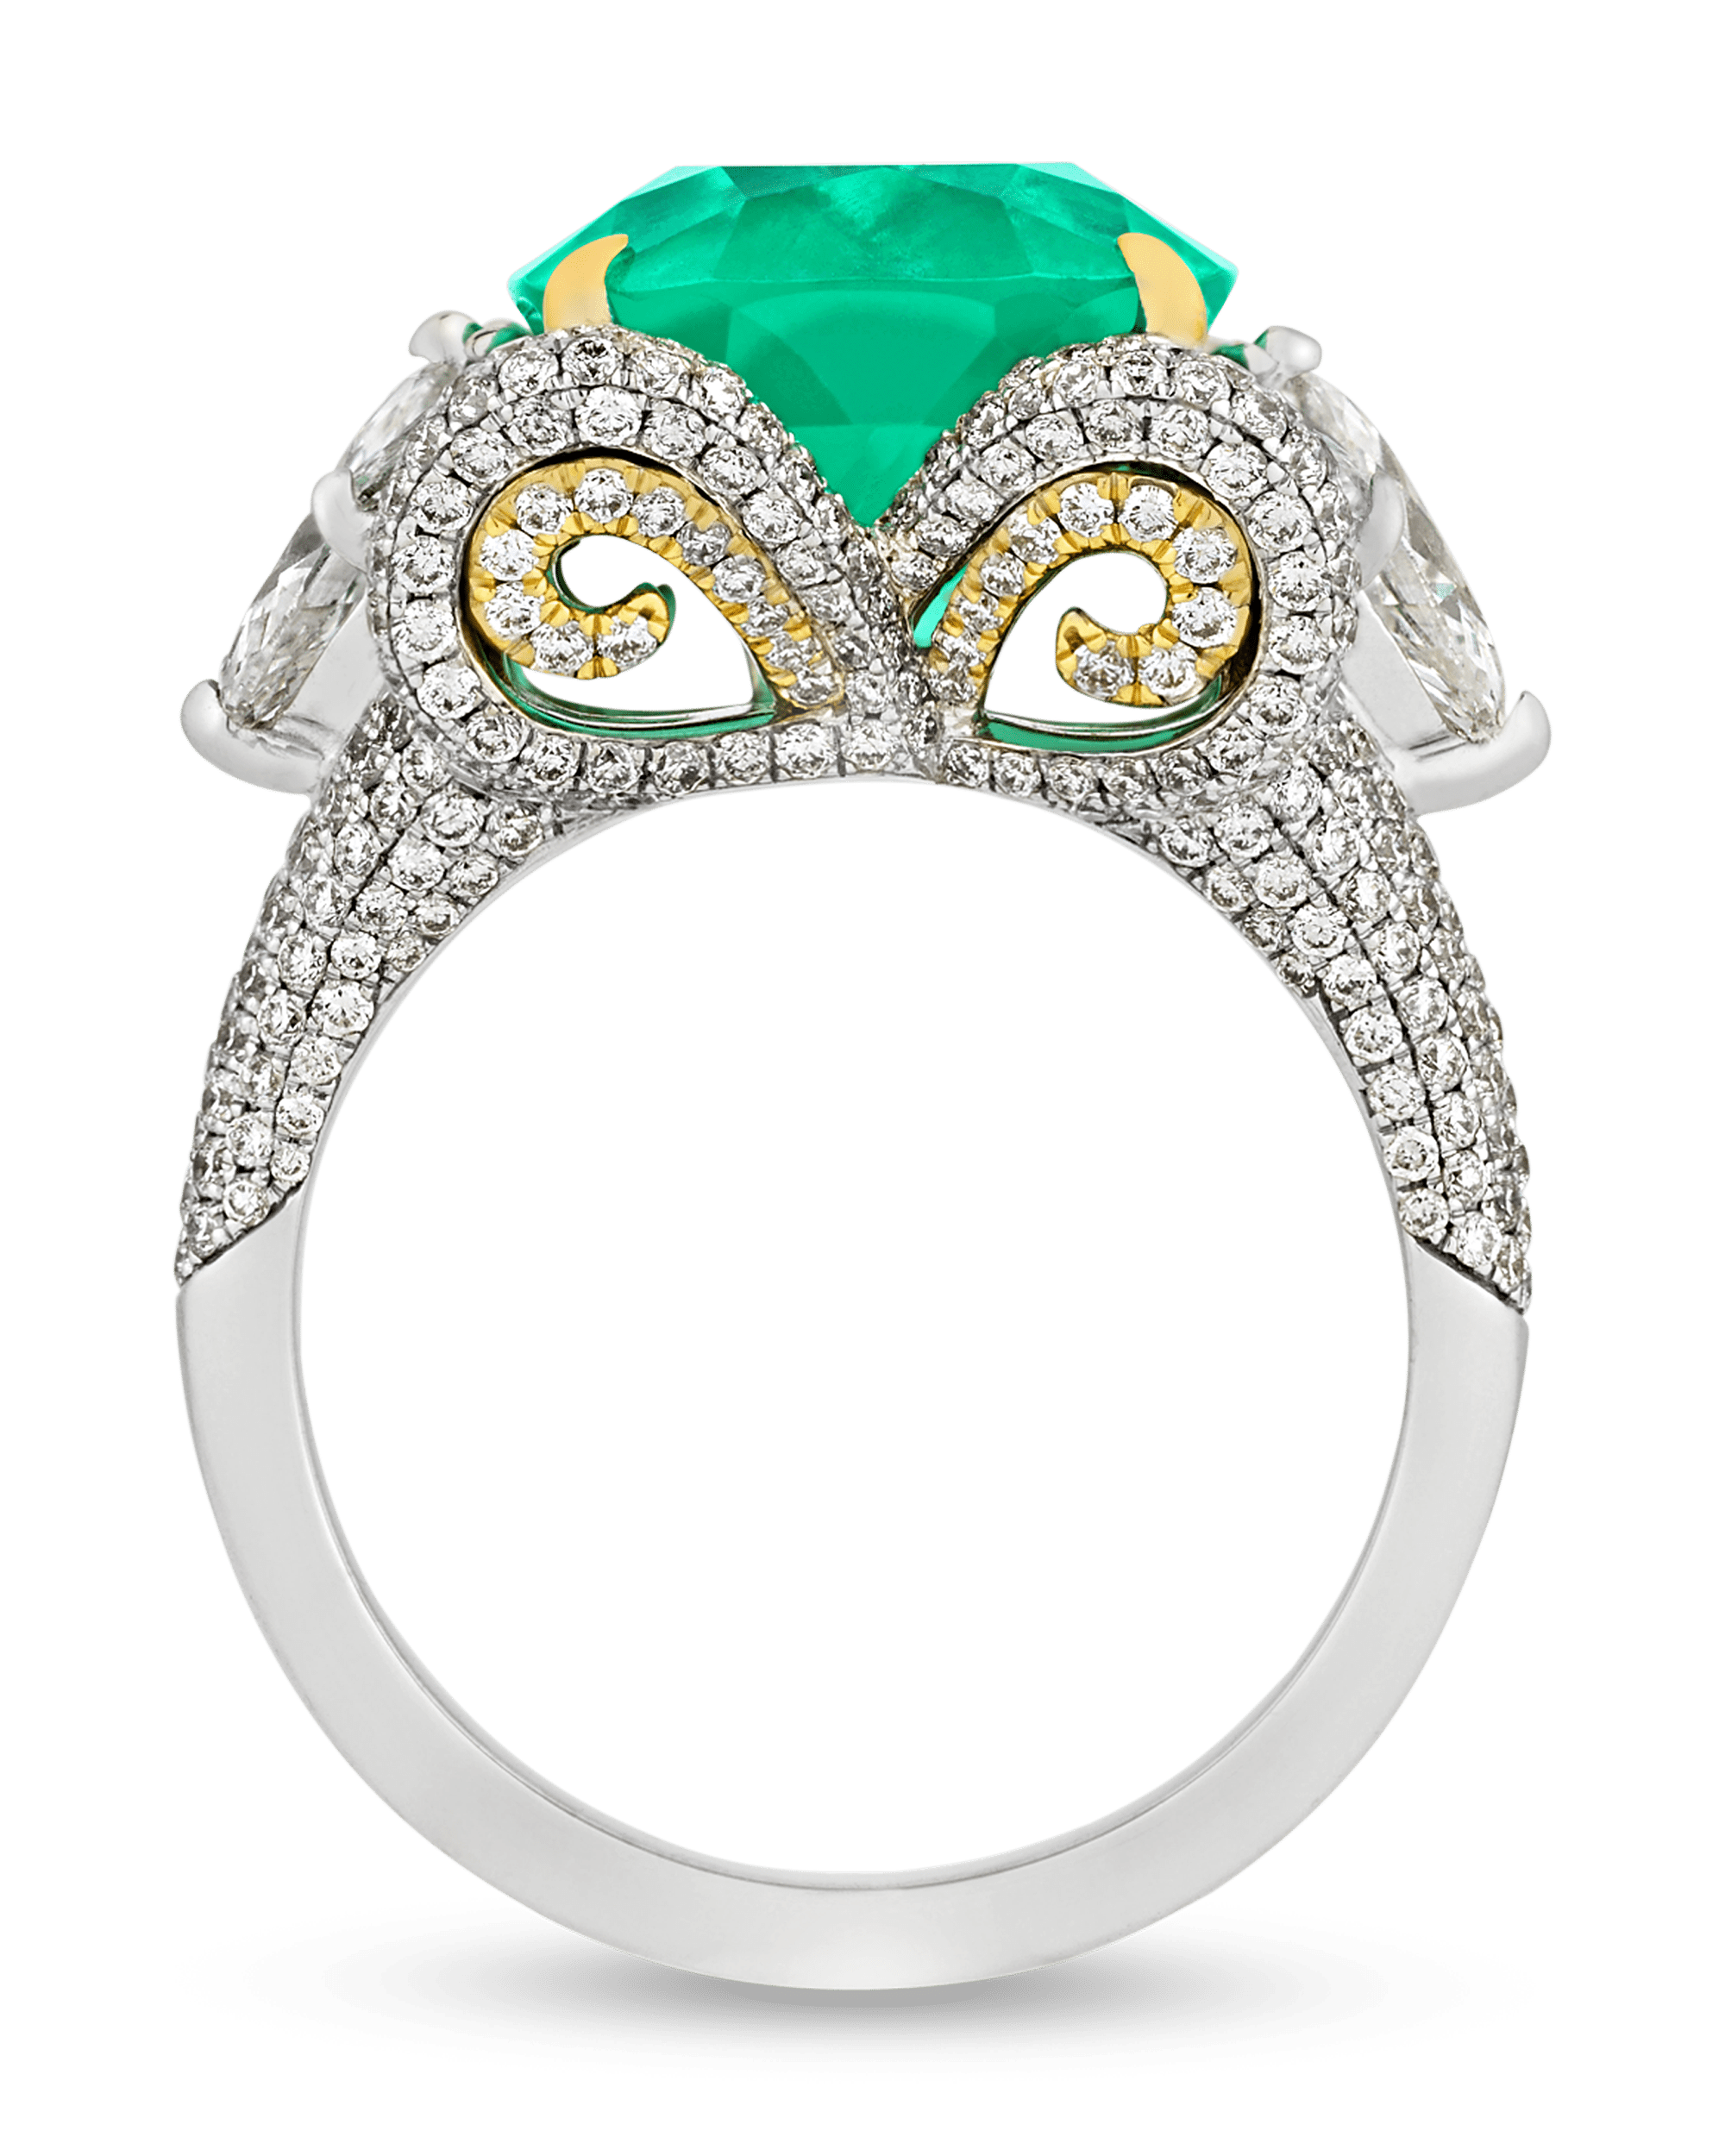 Russian Emerald Ring, 6.29 Carats